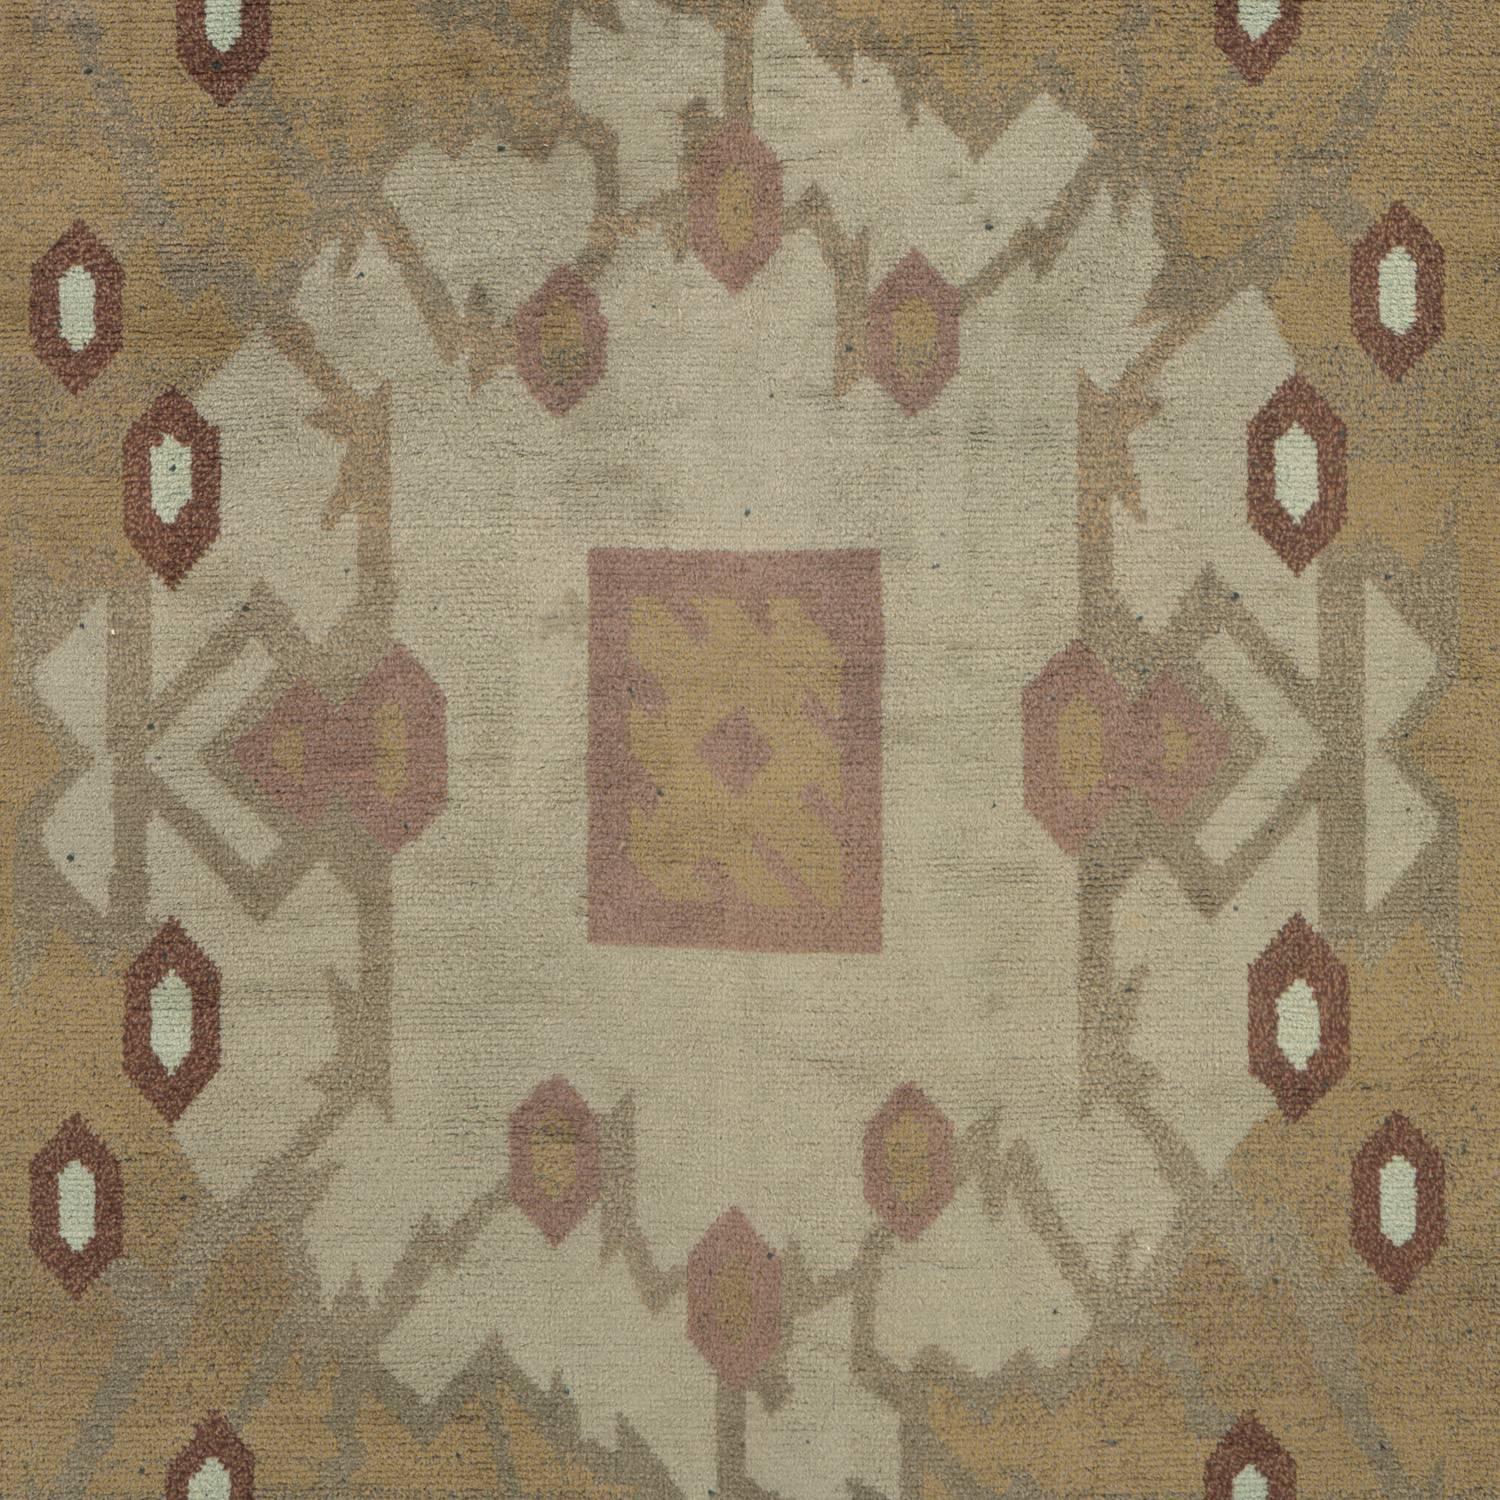 Scandinavian Modern 20th Century Swedish Pile-Weave Carpet by Eva Brummer For Sale